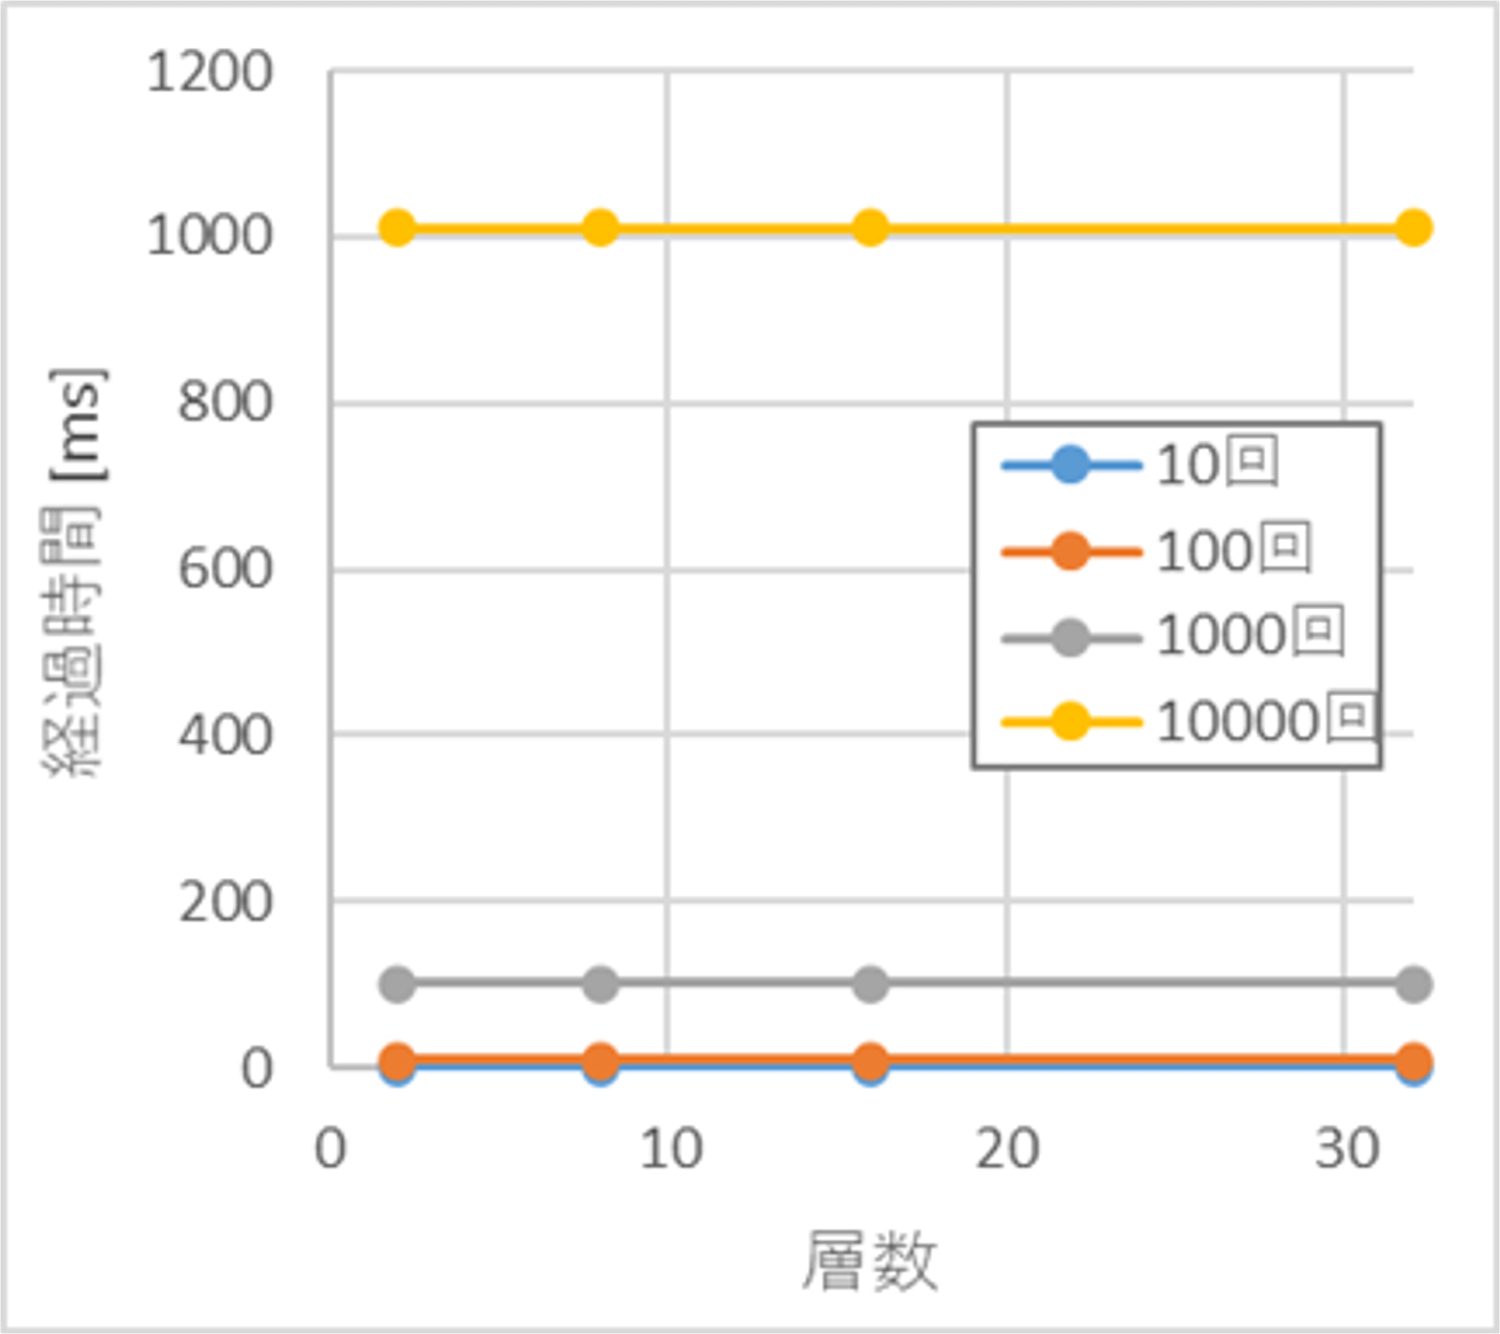 FPGAによるサンプリング実行時の経過時間(ms) (100×100画素)